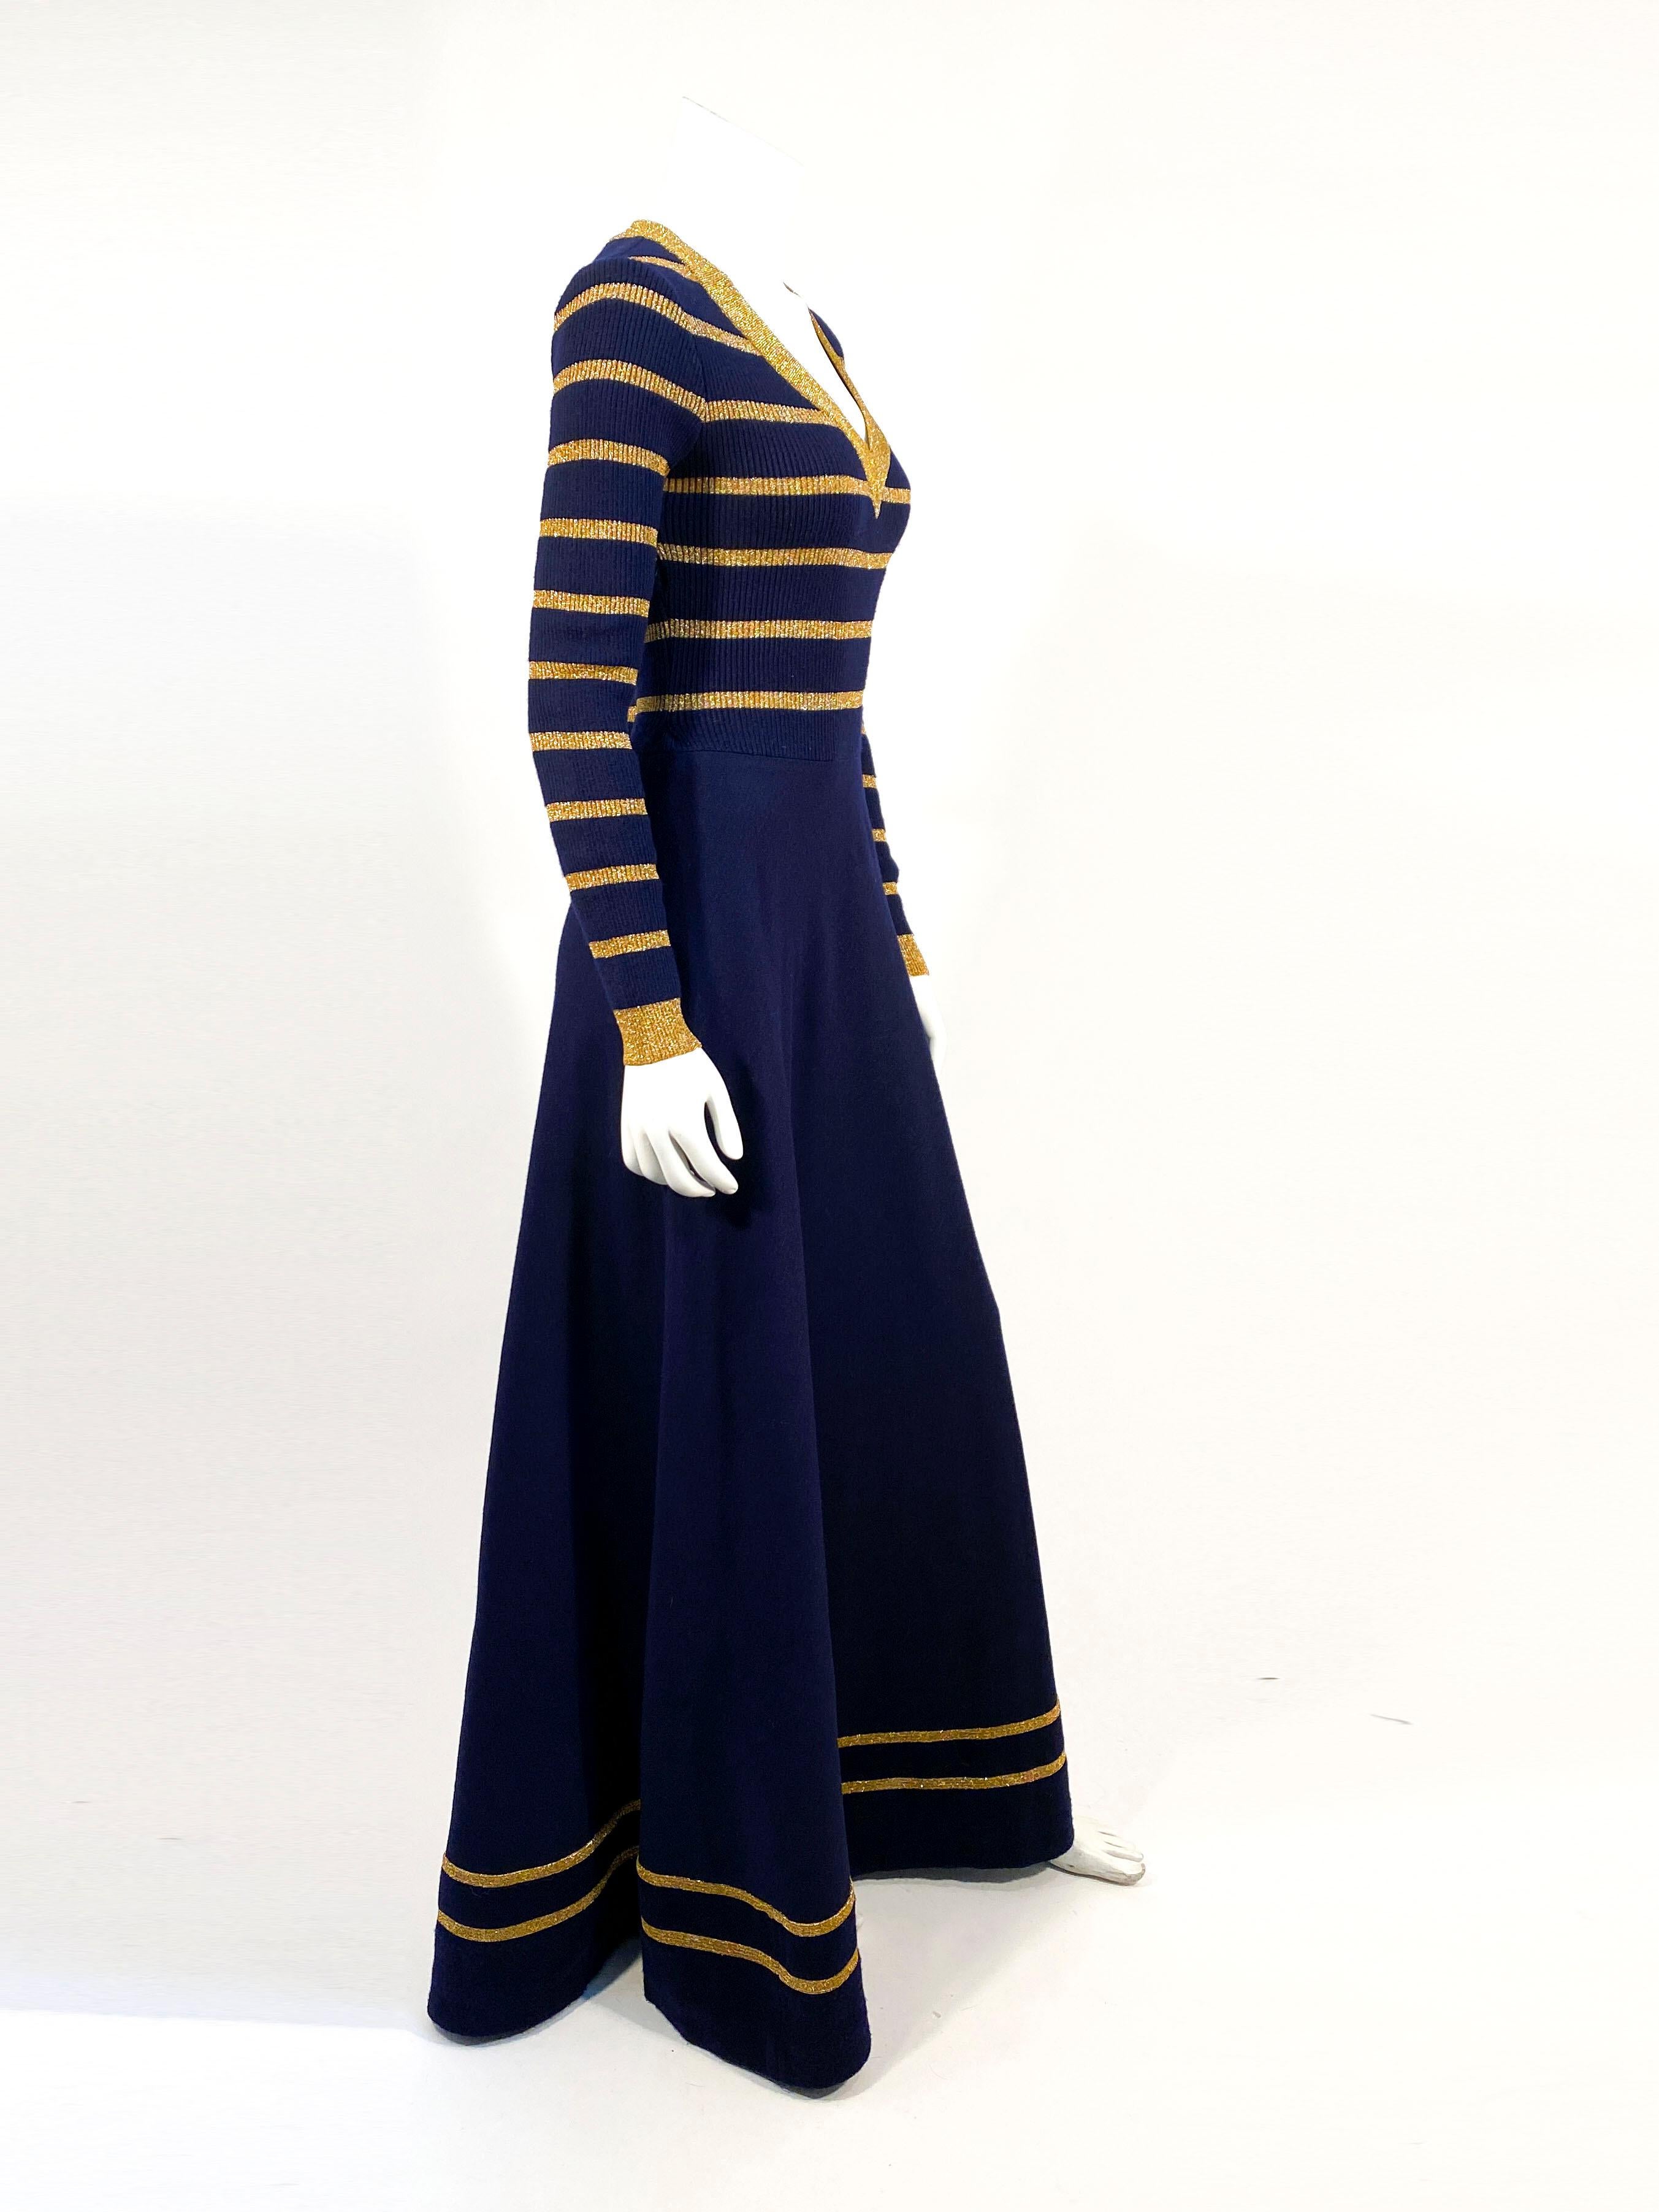 Women's 1970s Joseph Magnin Navy and Metallic Knit Dress